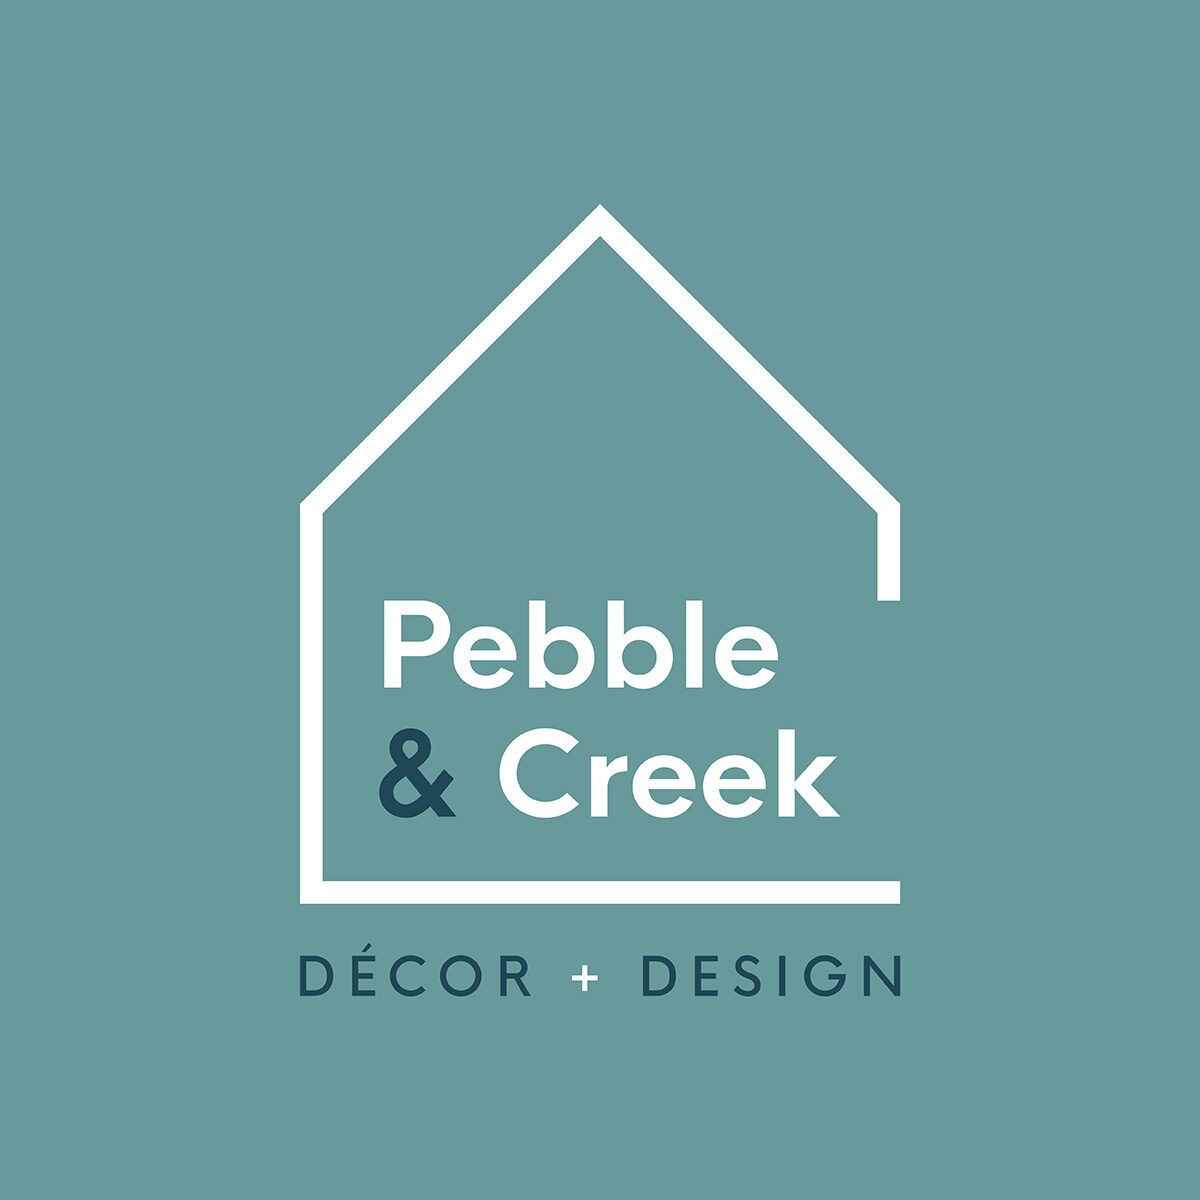 lindsay-mcghee-designs-pebble-and-creek-logo-two-tone-mintbg-1200